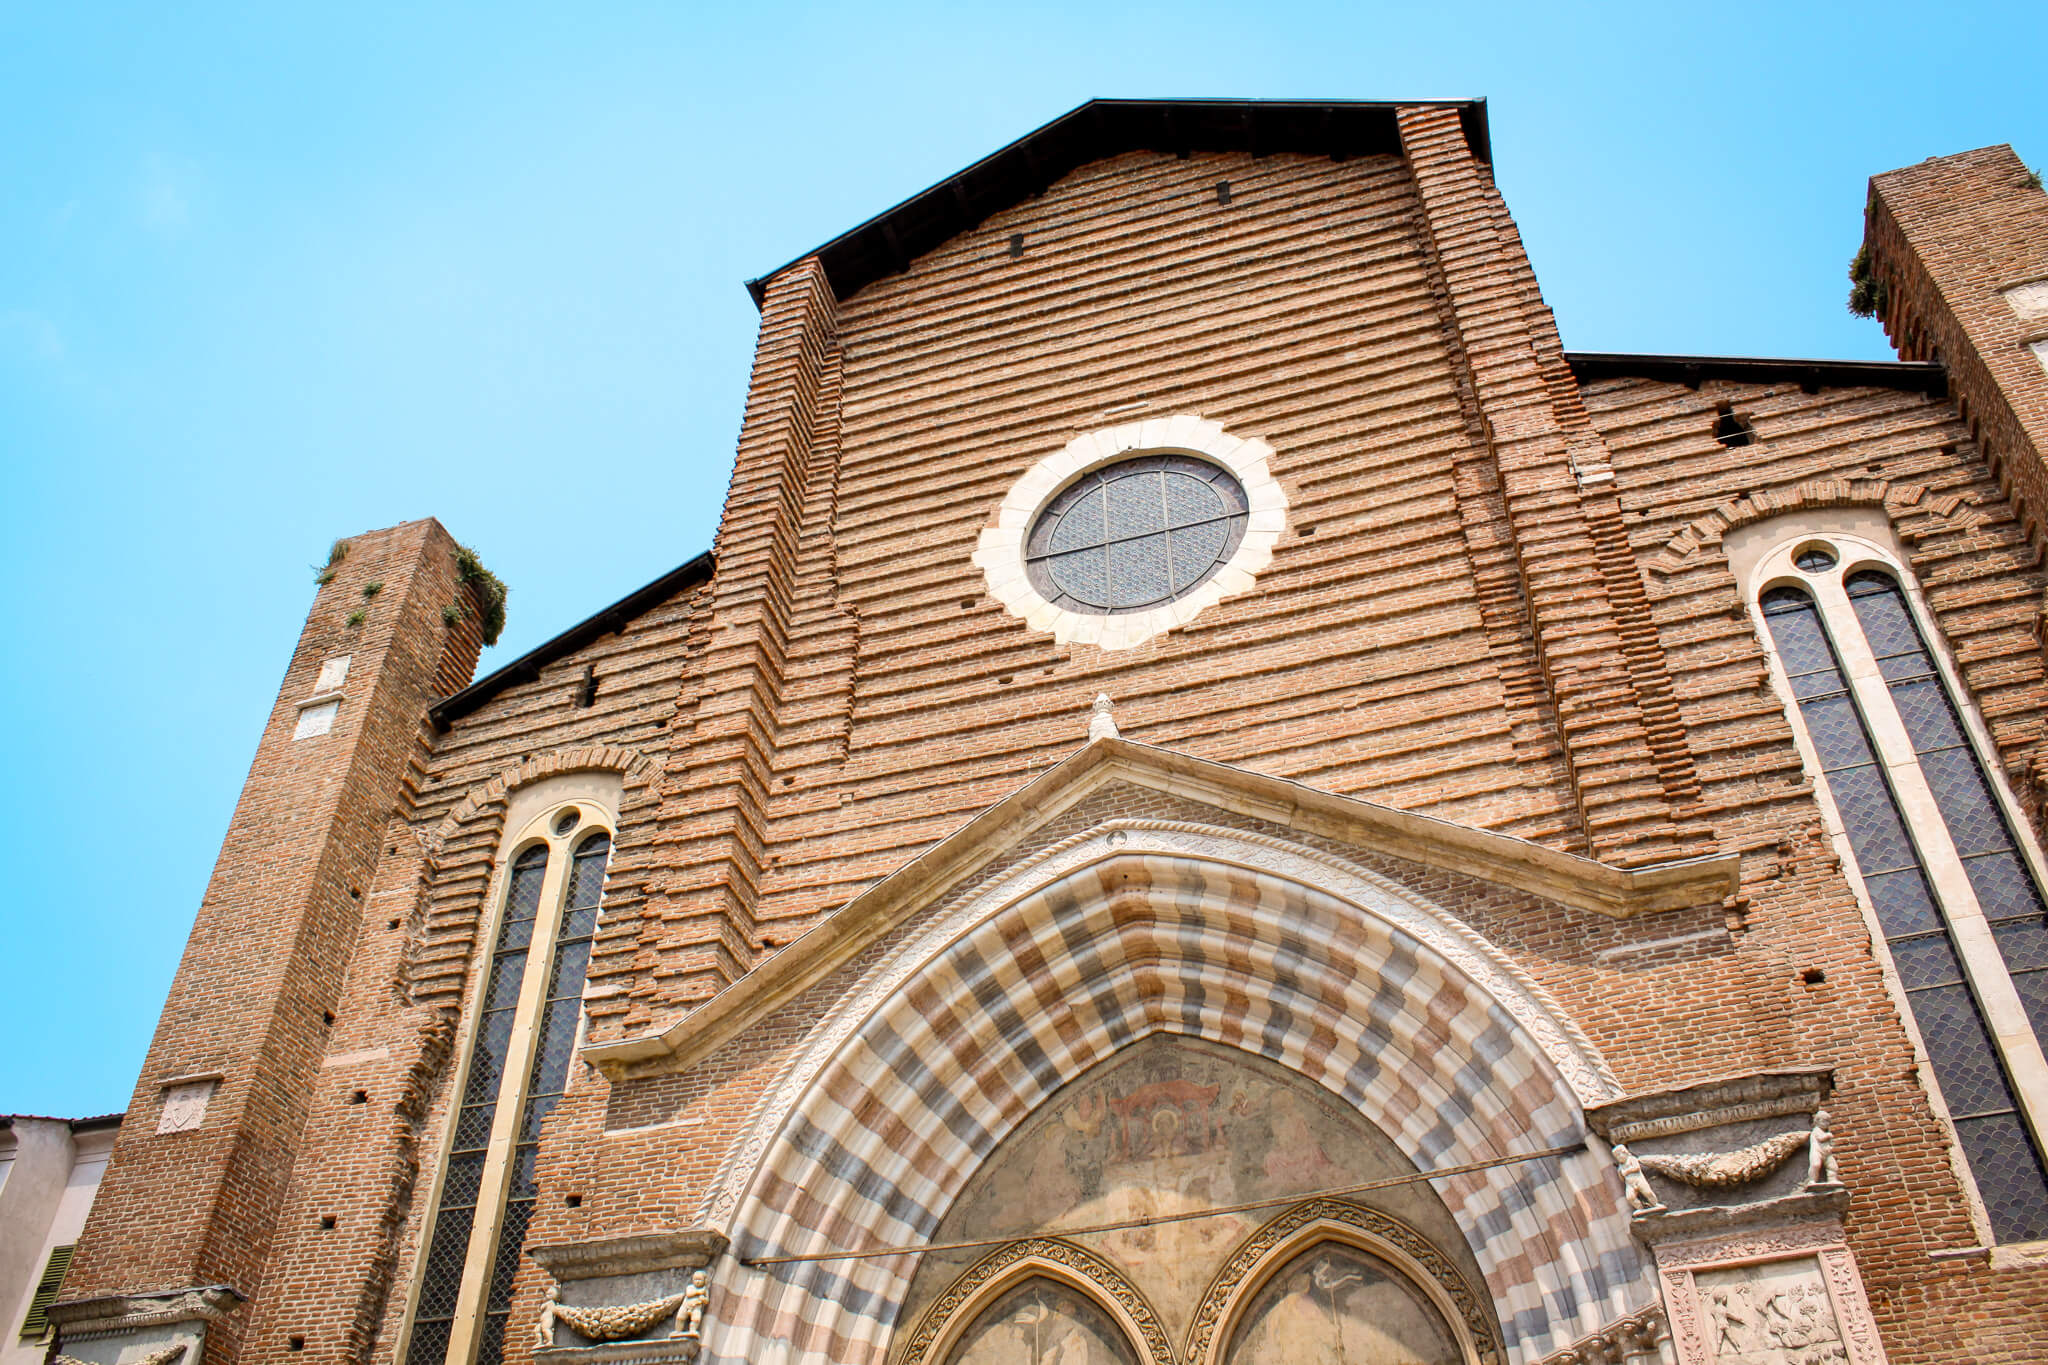 The unfinished facade of the Basilica di Santa Anastasia in Verona